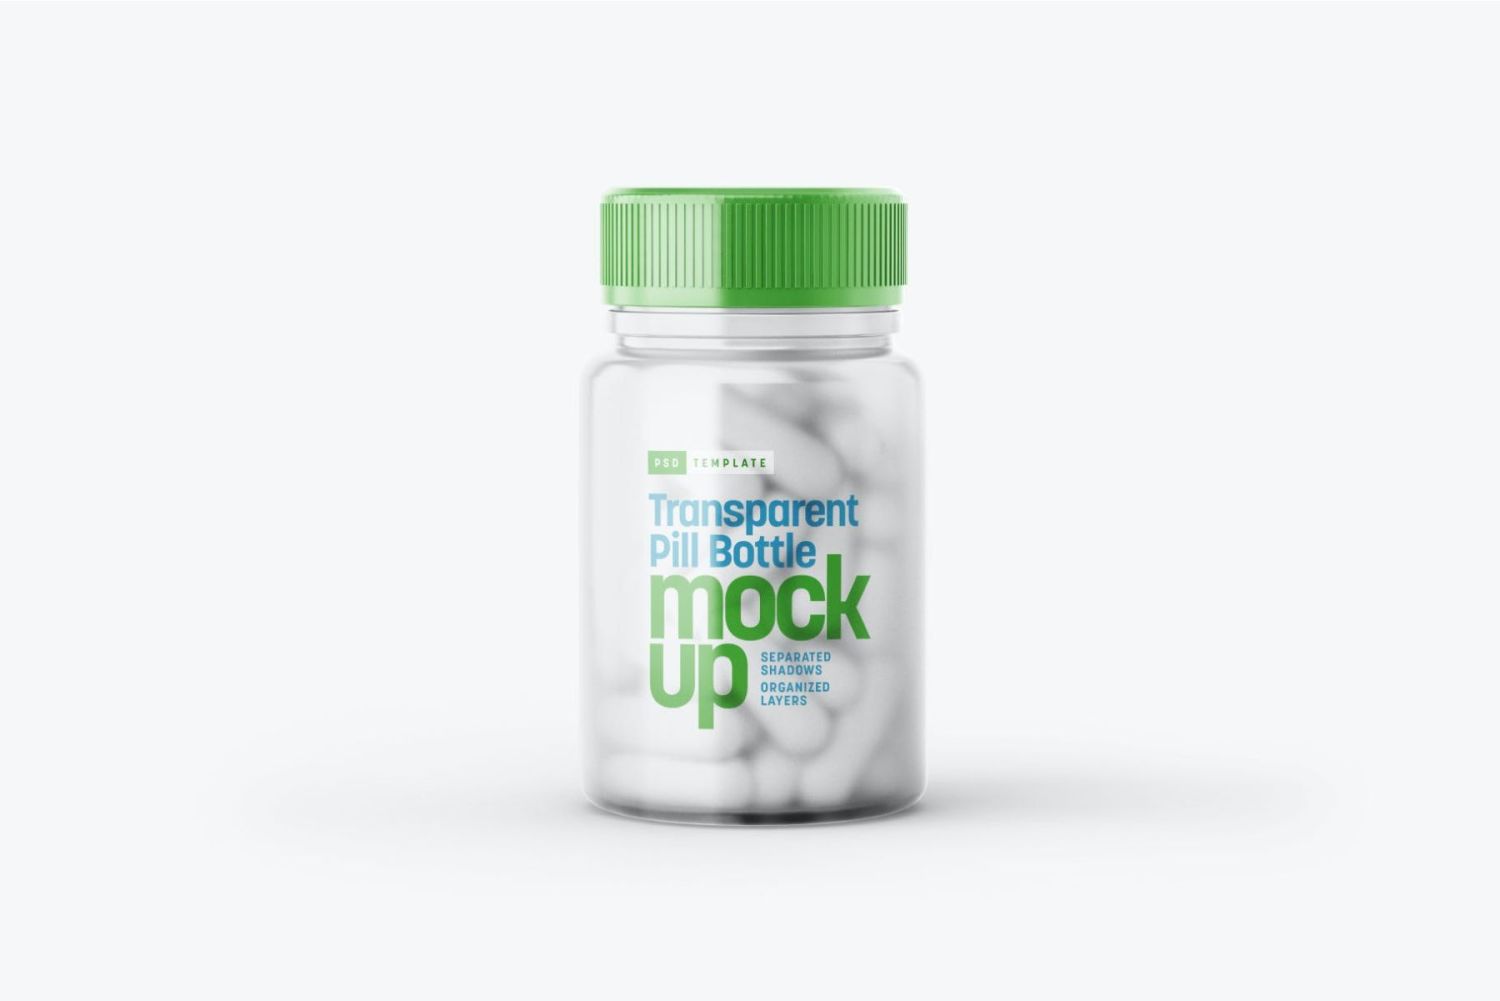 透明药瓶样机套装 Transparent Pill Bottle Mockup Set插图9